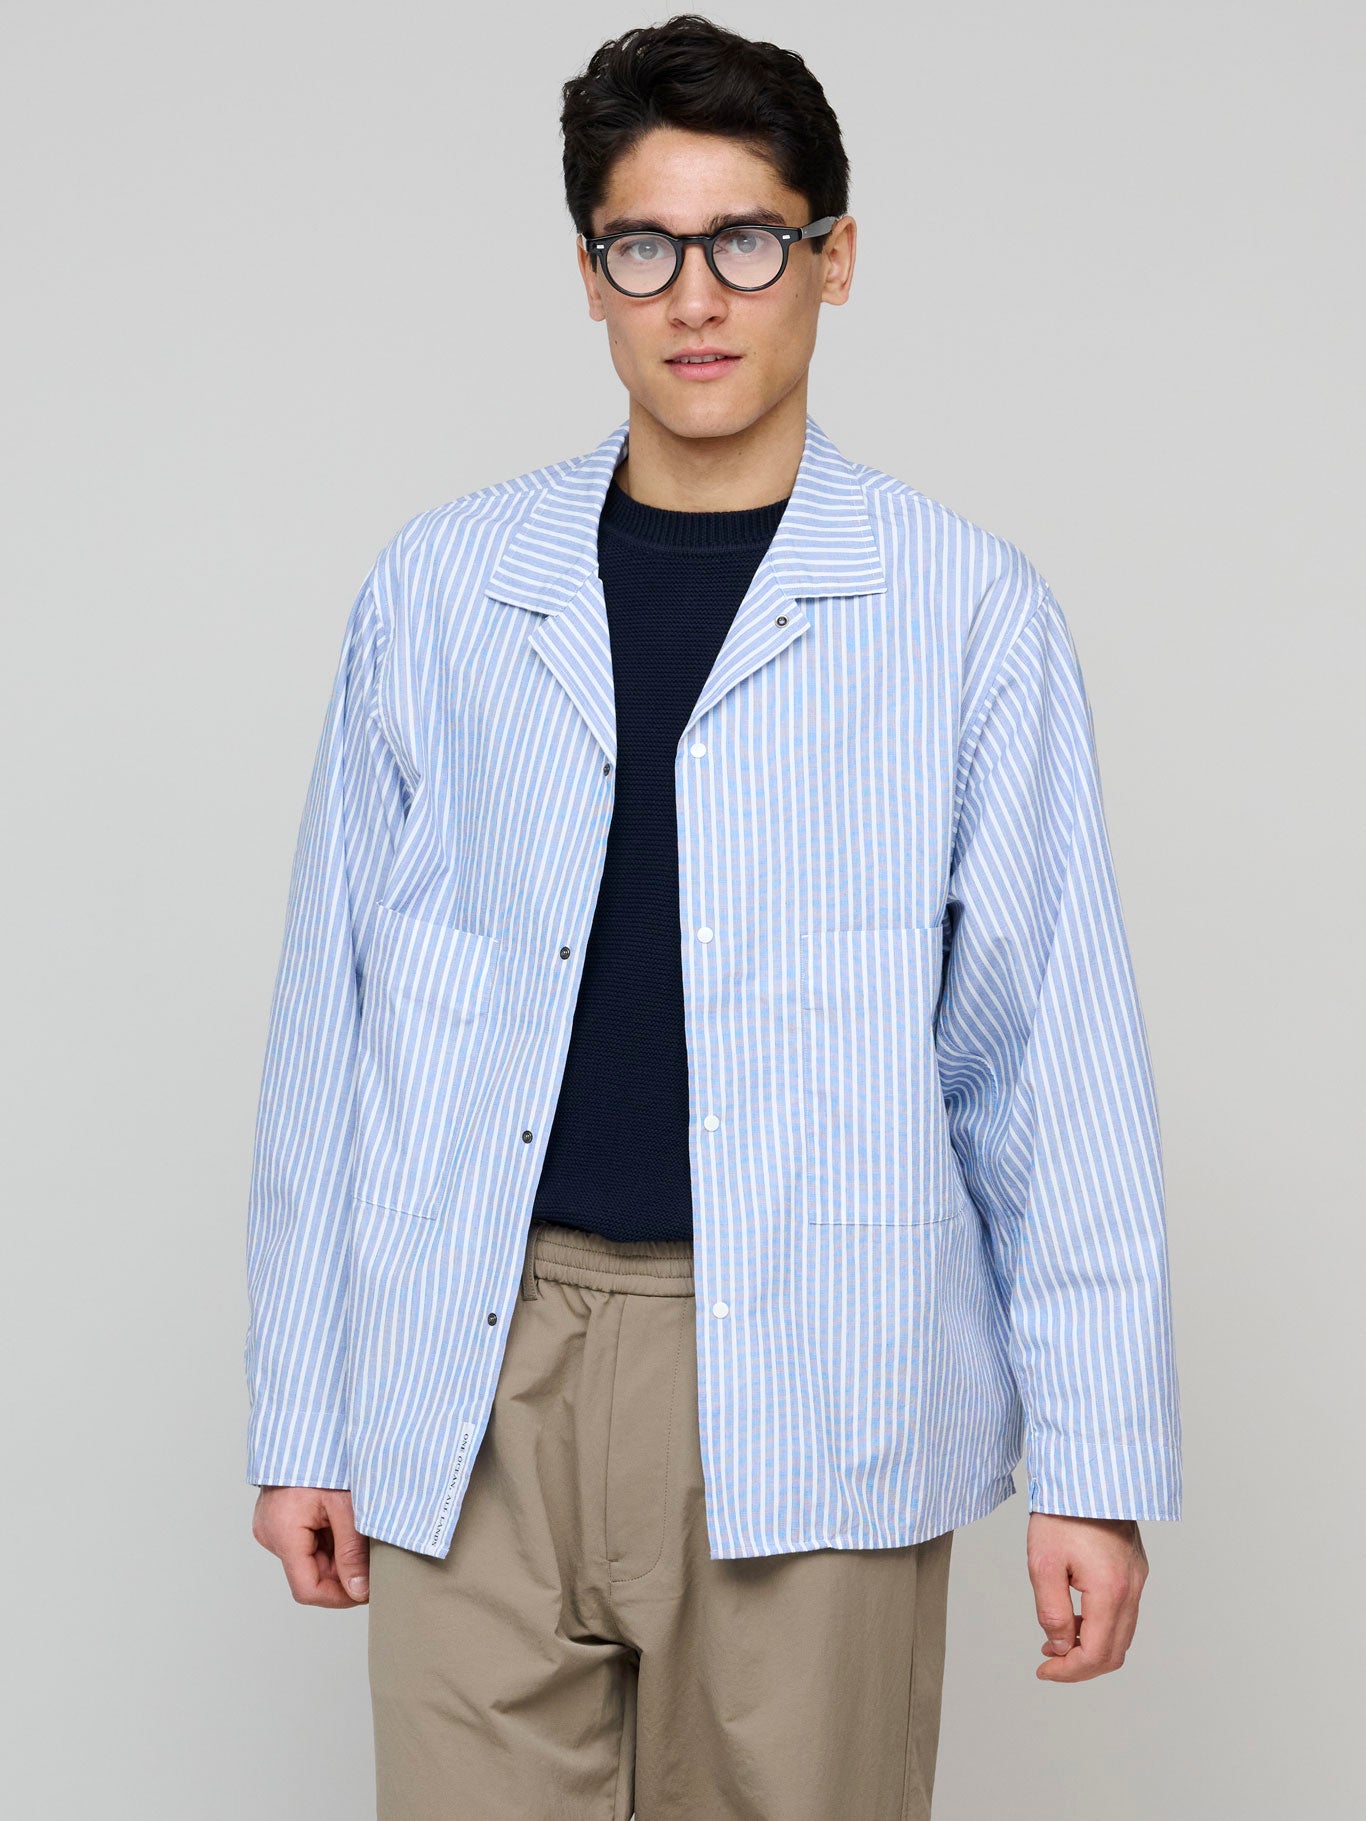 ODU Jacket, Blue Stripe